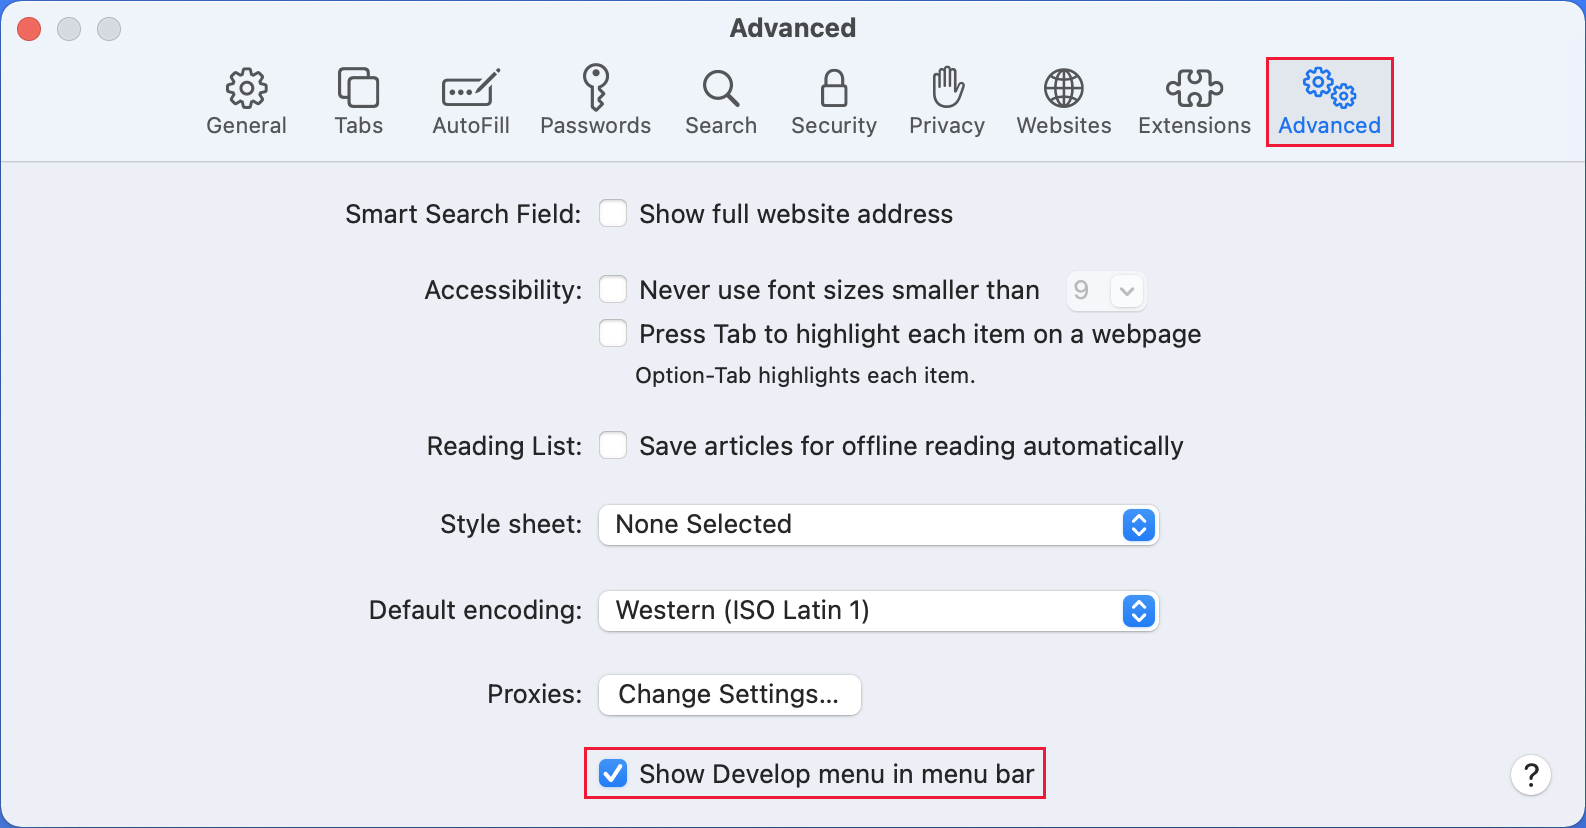 Safari advanced menu with show develop menu in menu bar selected.